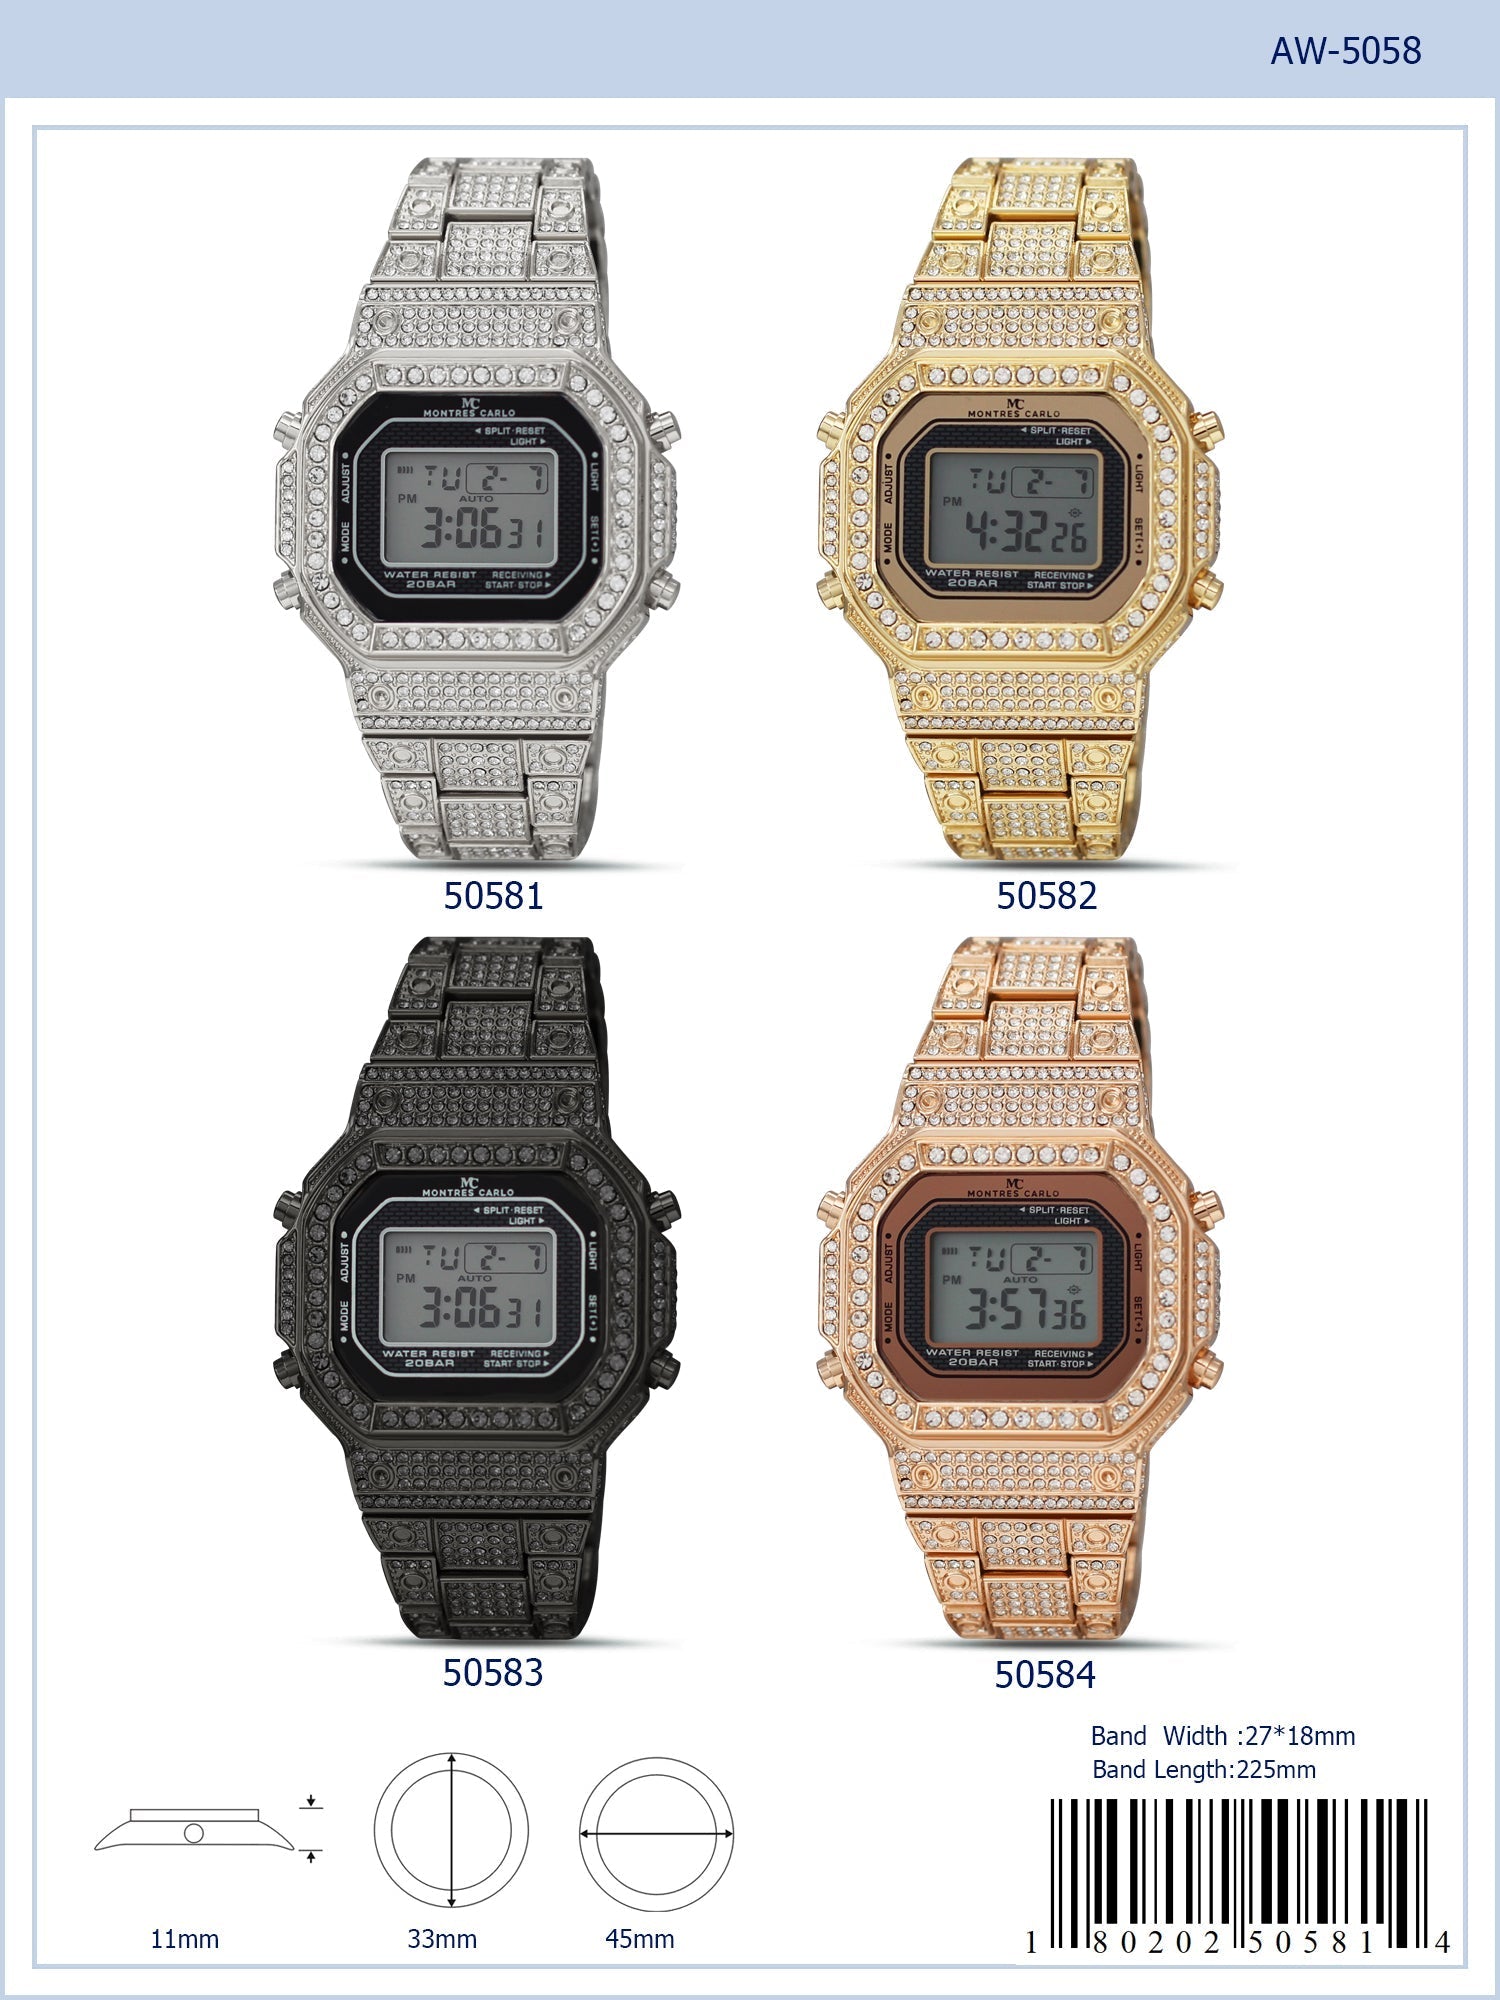 5058 - Iced Digital Watch Special